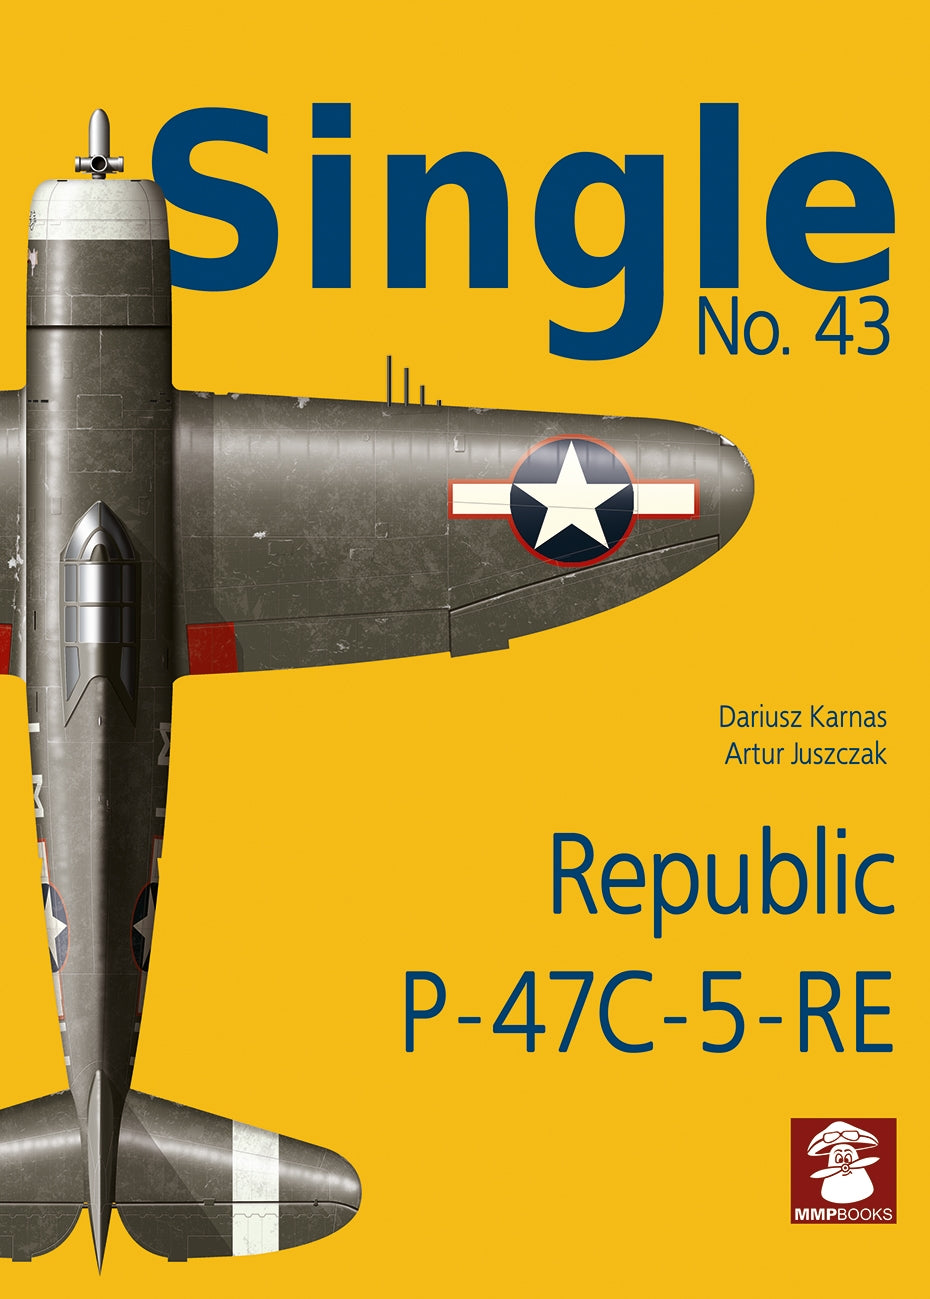 Einzelne Nr. 43 Republic P-47C-5-RA 